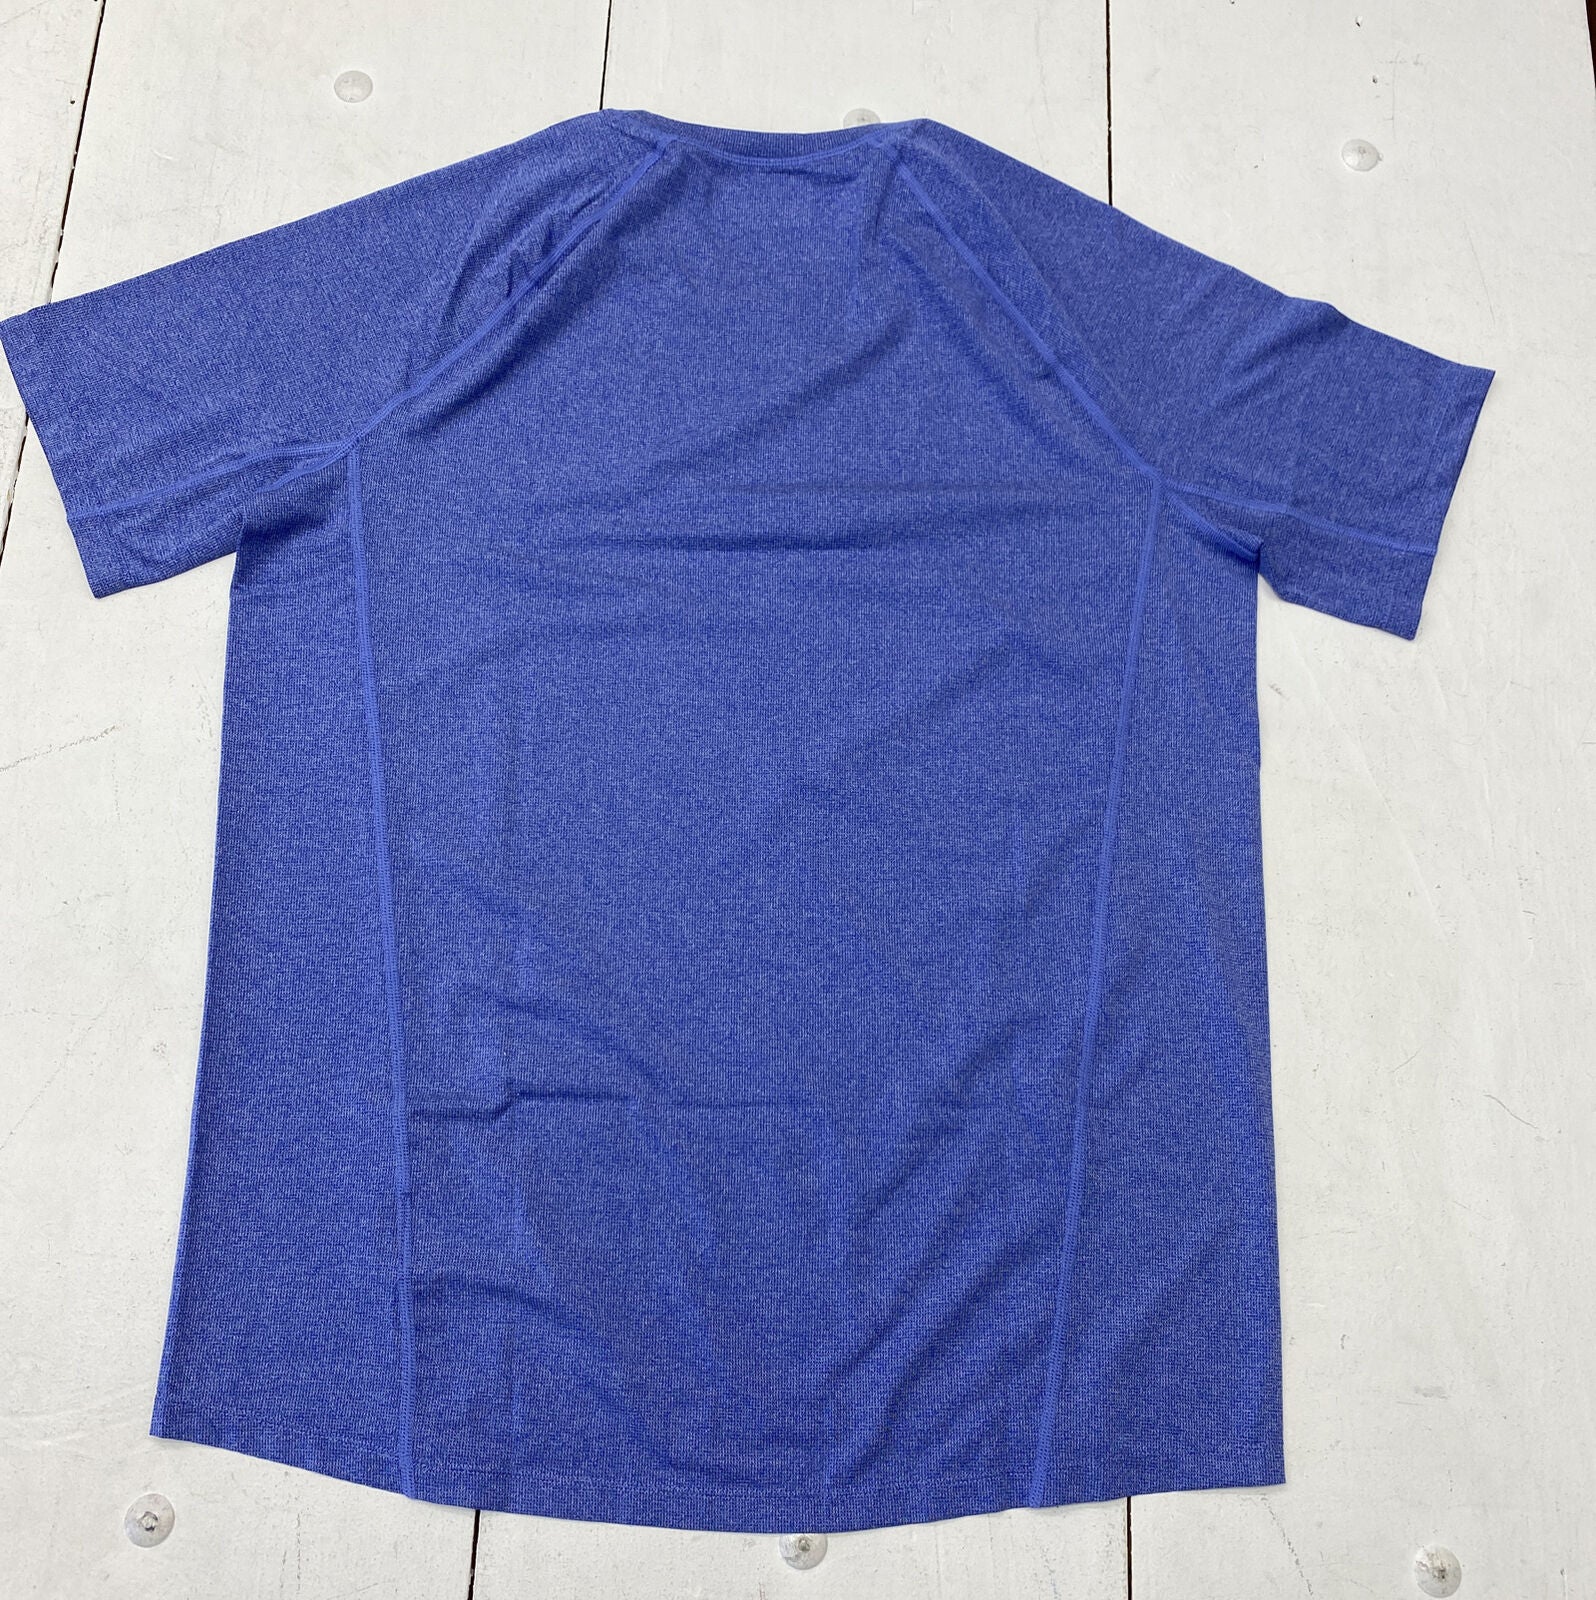 Mondetta Dress Blue/Surf Blue Performance Tee Pack of 2 Shirts